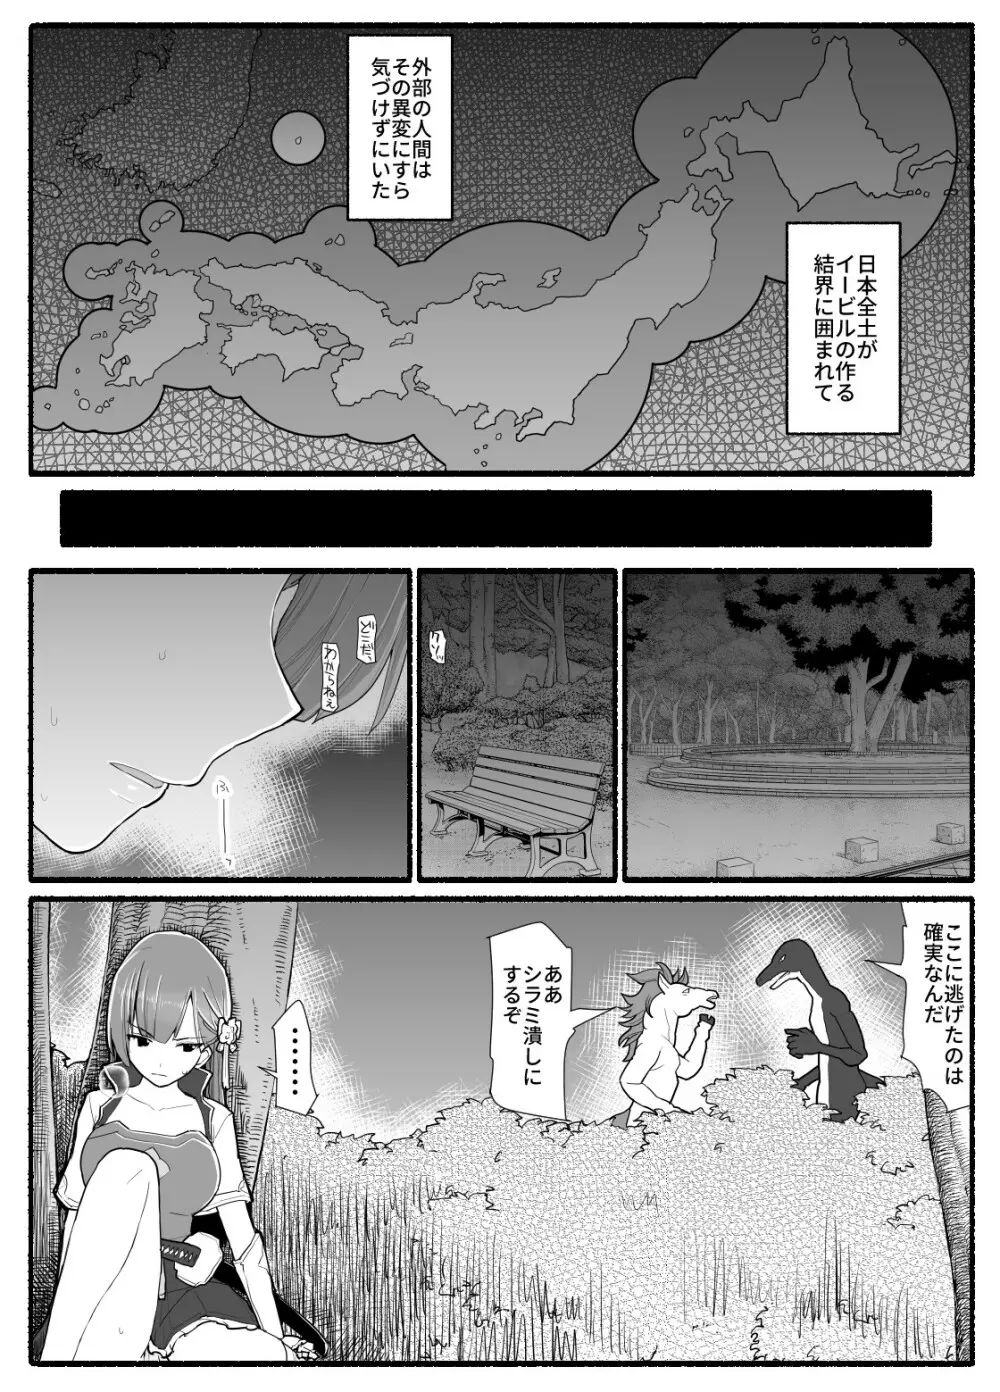 魔法少女vs淫魔生物 15 3ページ